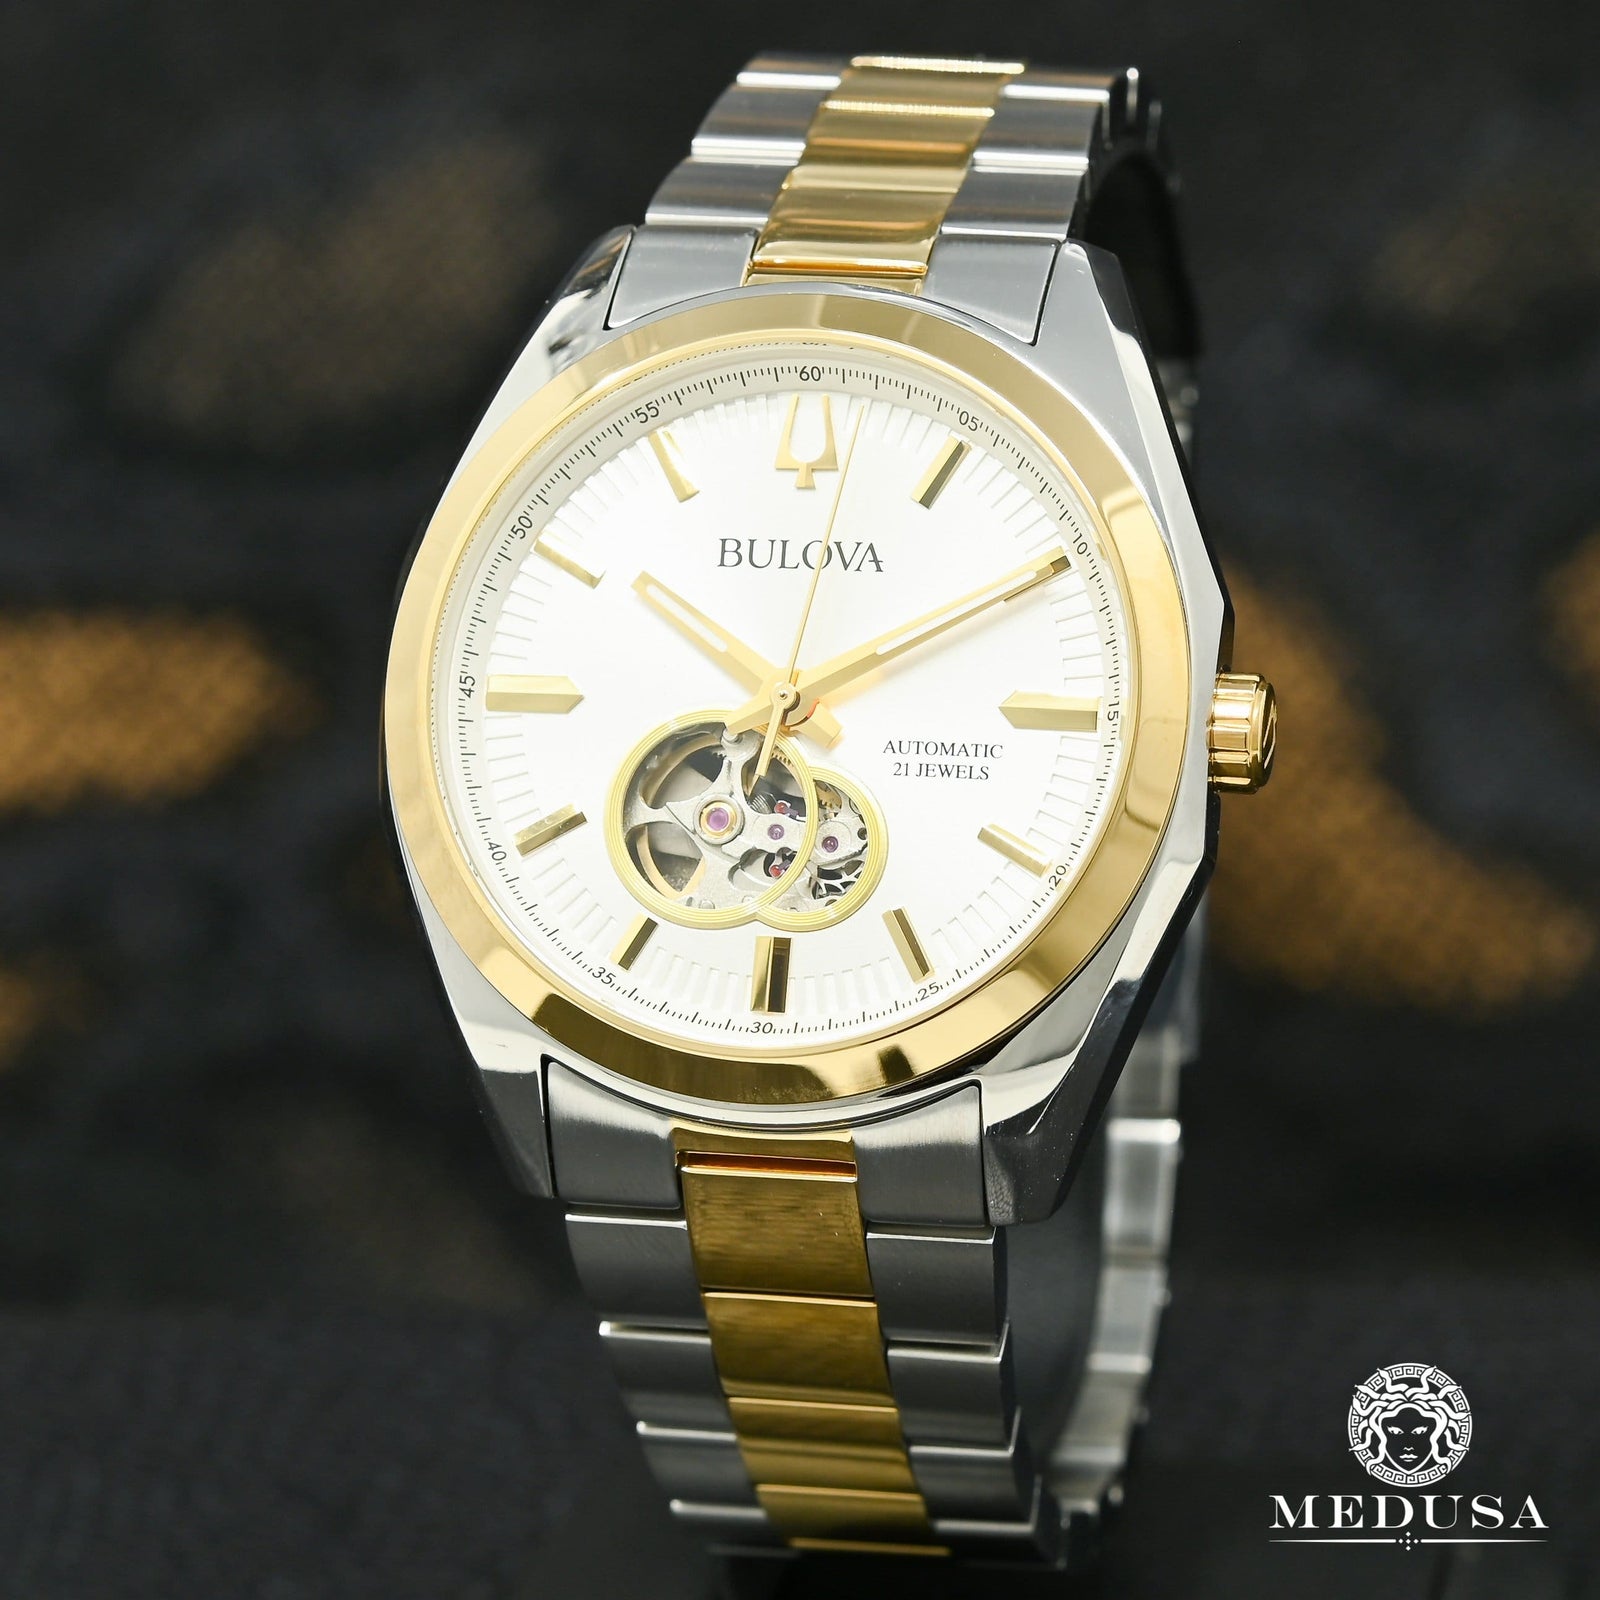 bulova | Bulova Swarovski Watches Collections | Medusa jewelry